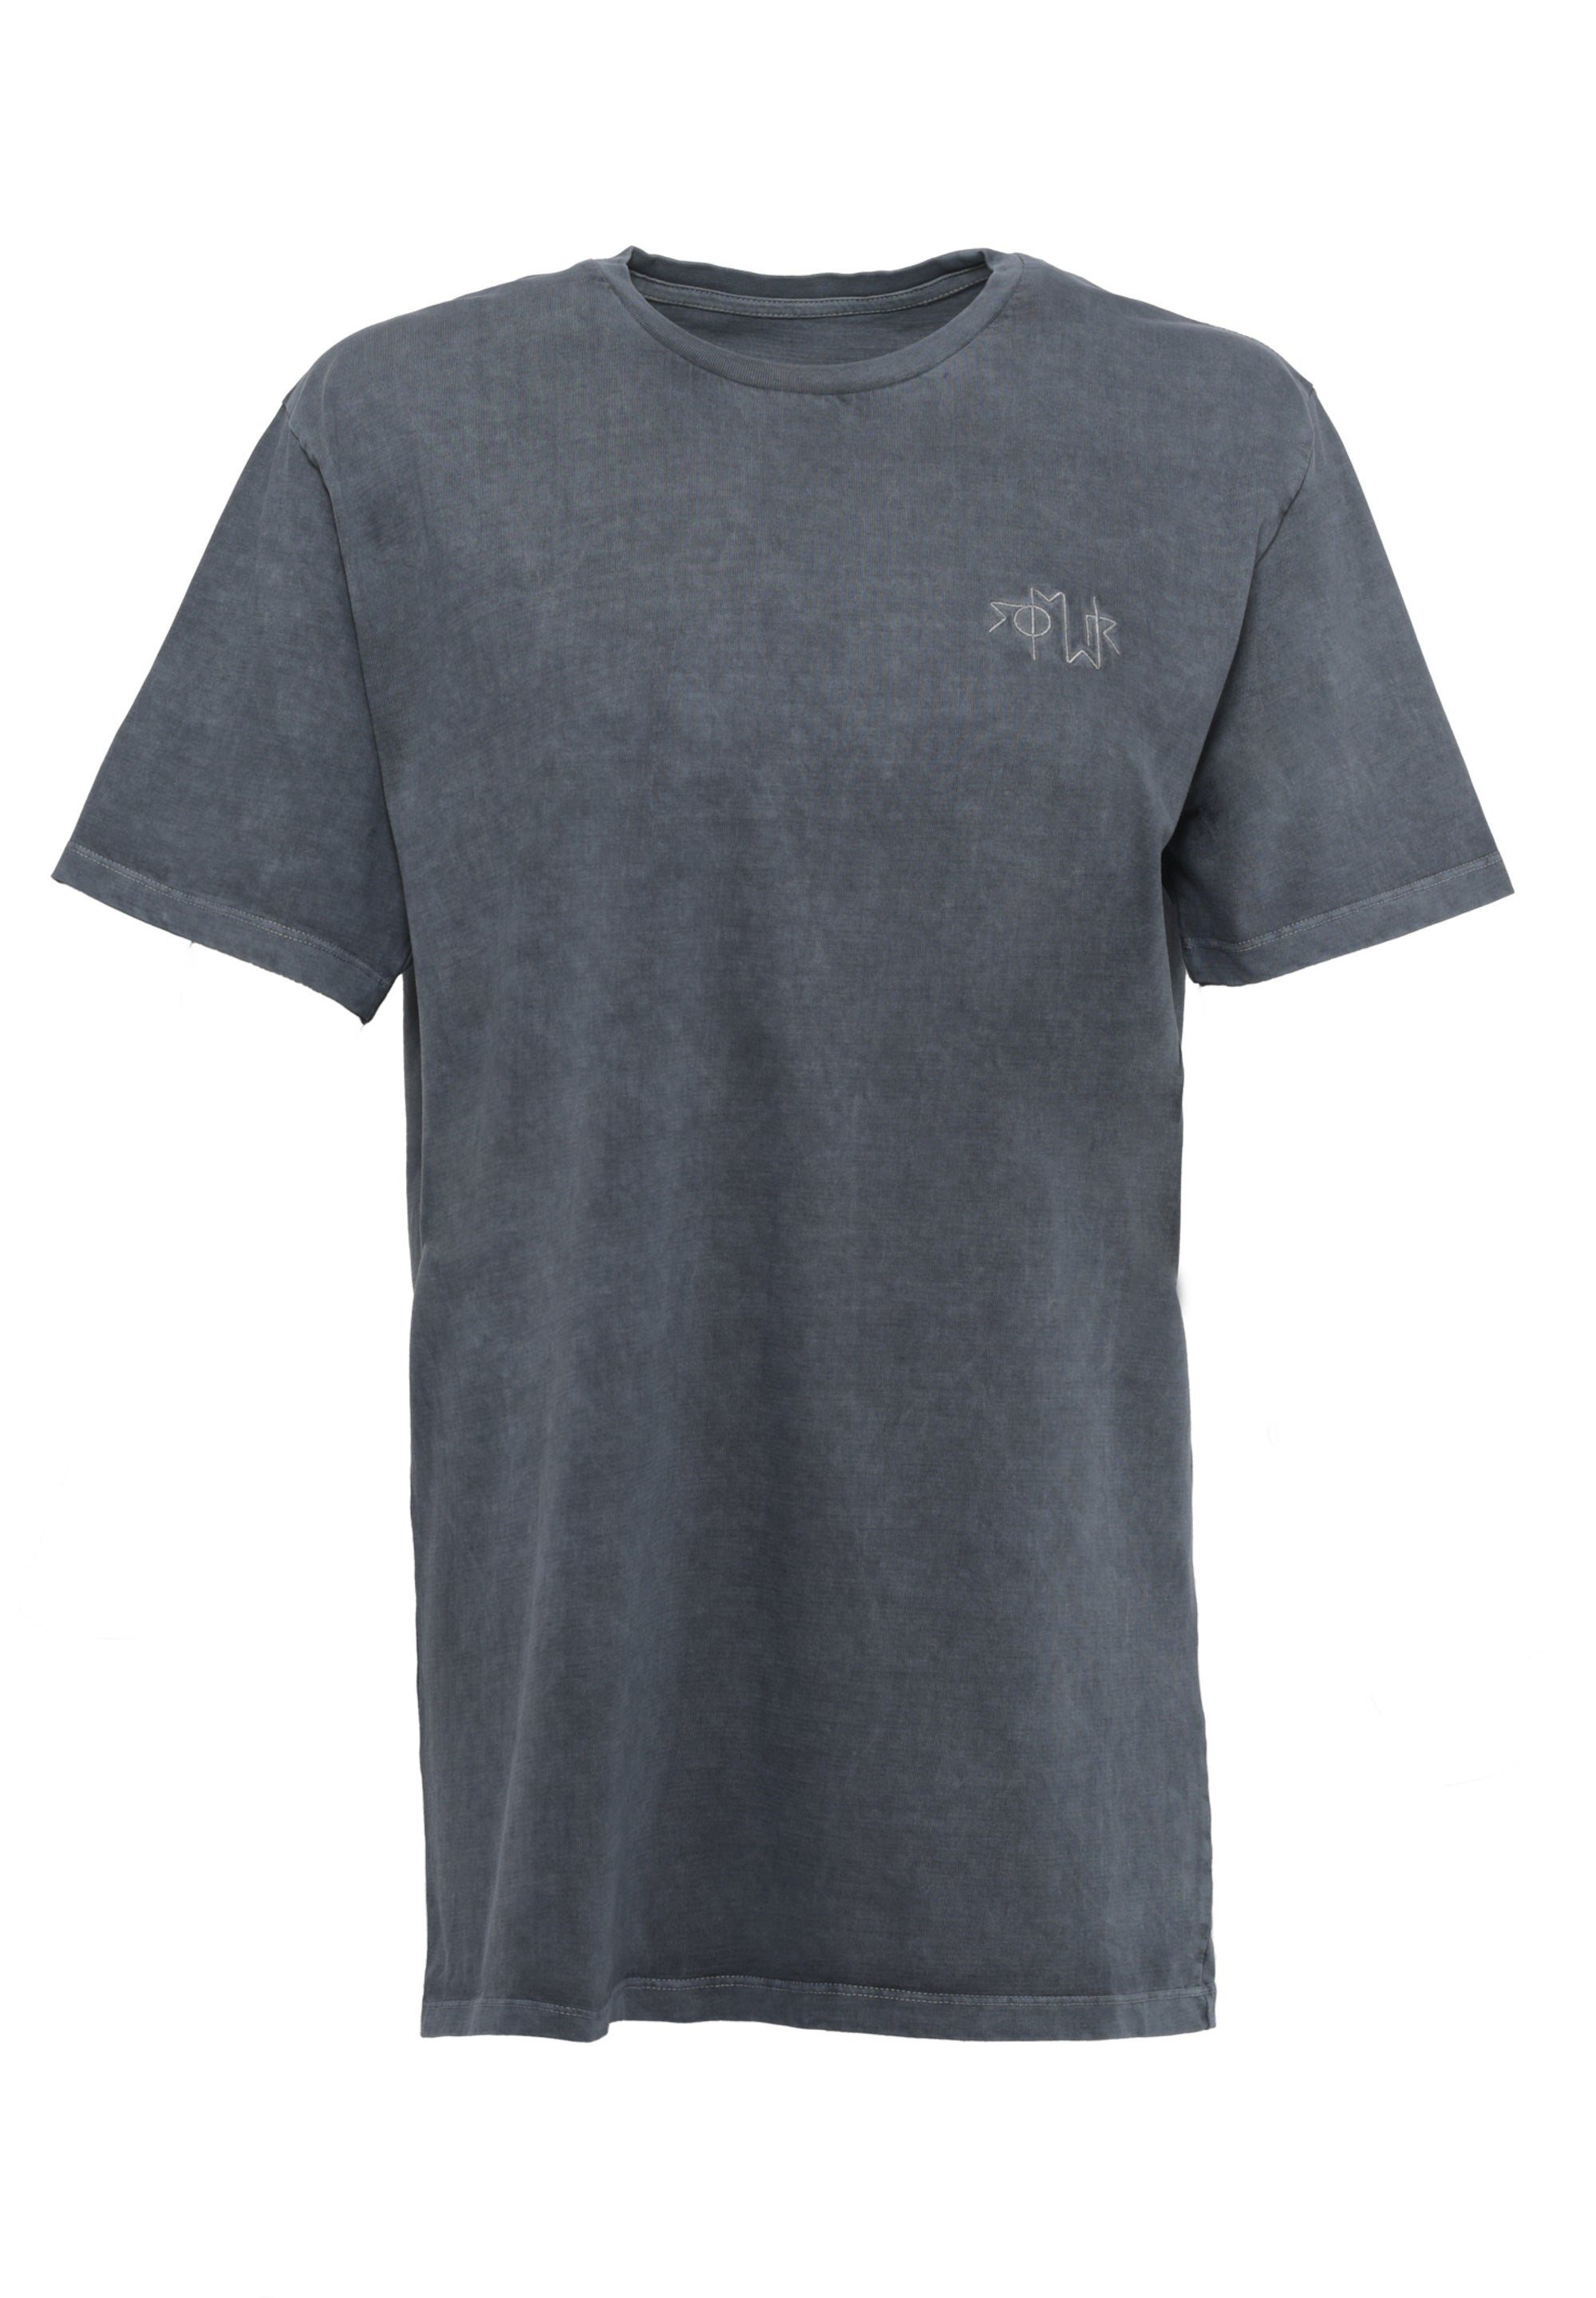 SOMWR FRESH TEE T-Shirt GRY013